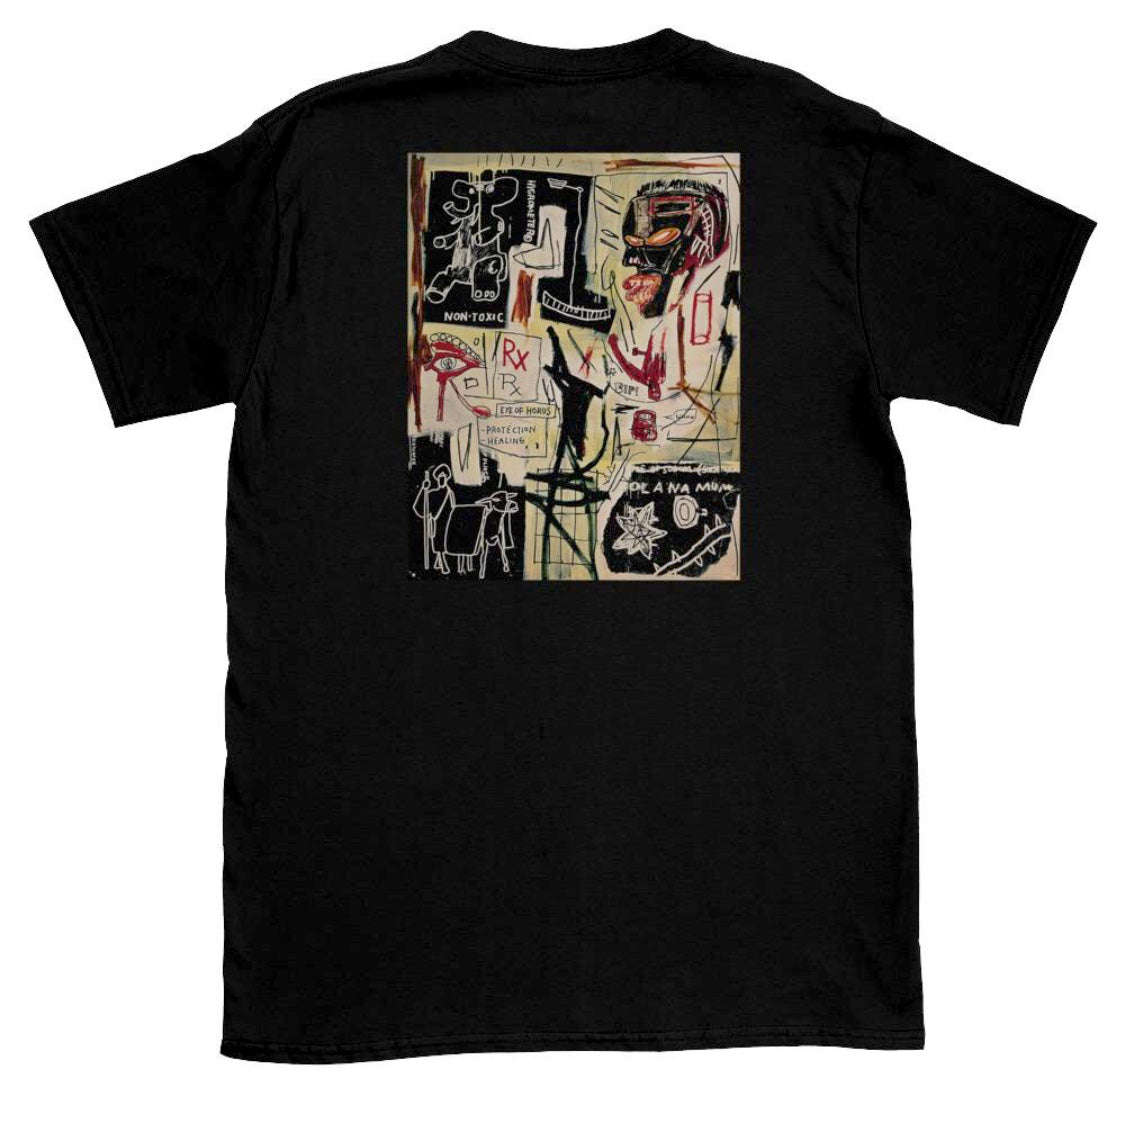 Basquiat "Melting Point of Ice" Tee